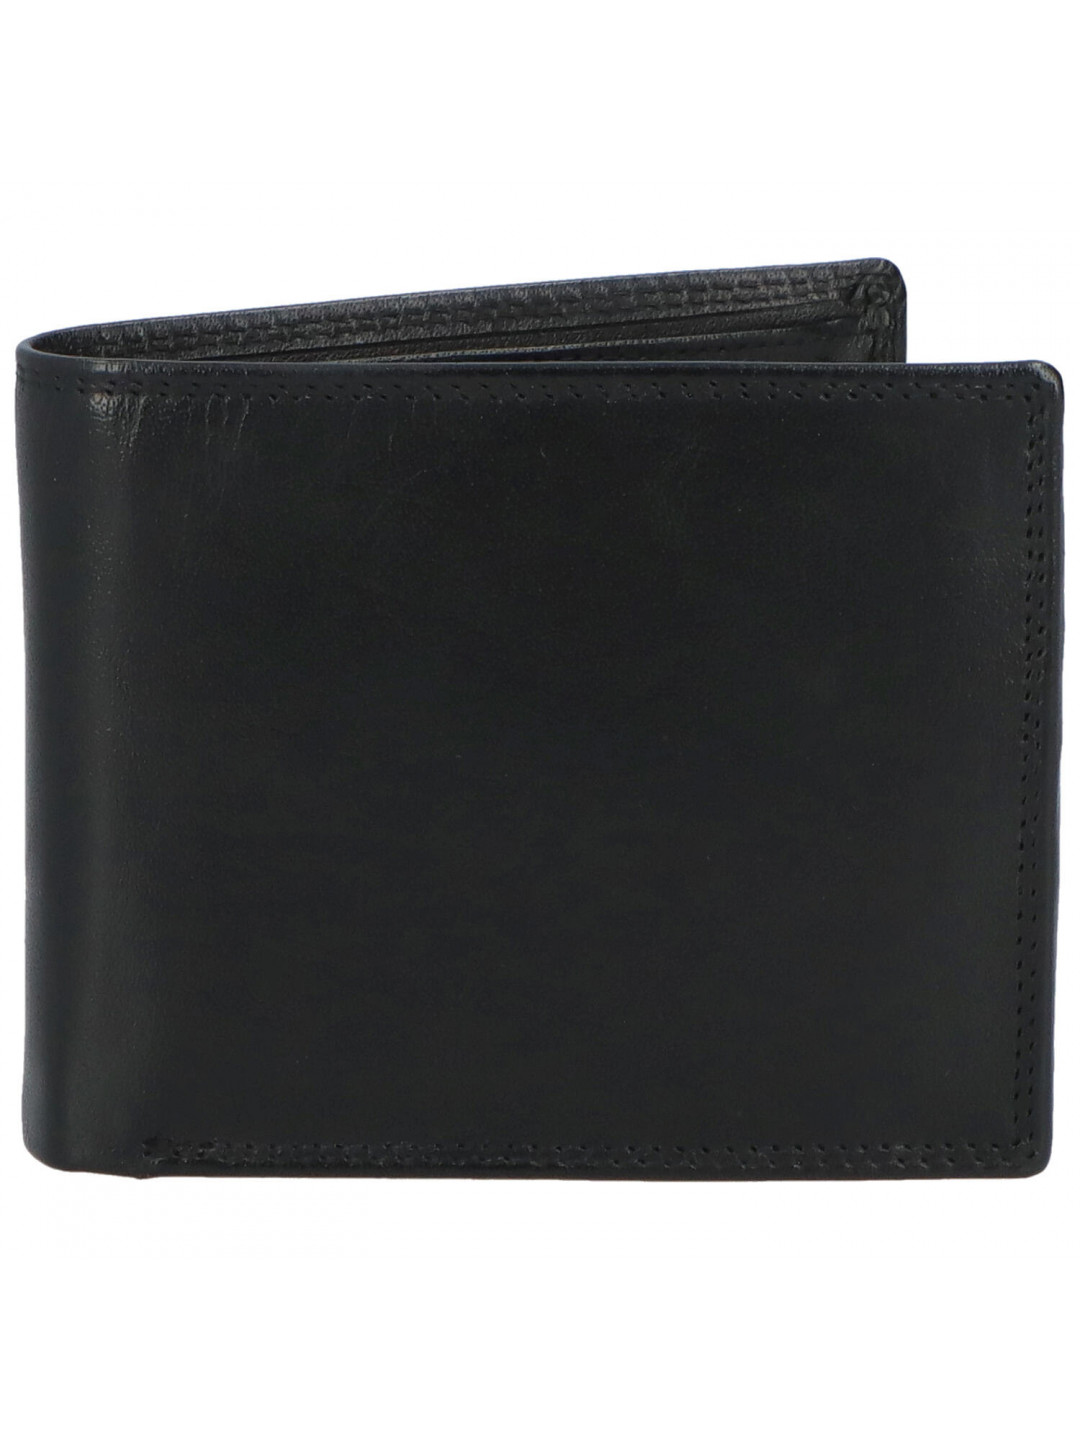 Pánská kožená peněženka černá – Tomas Zolltar